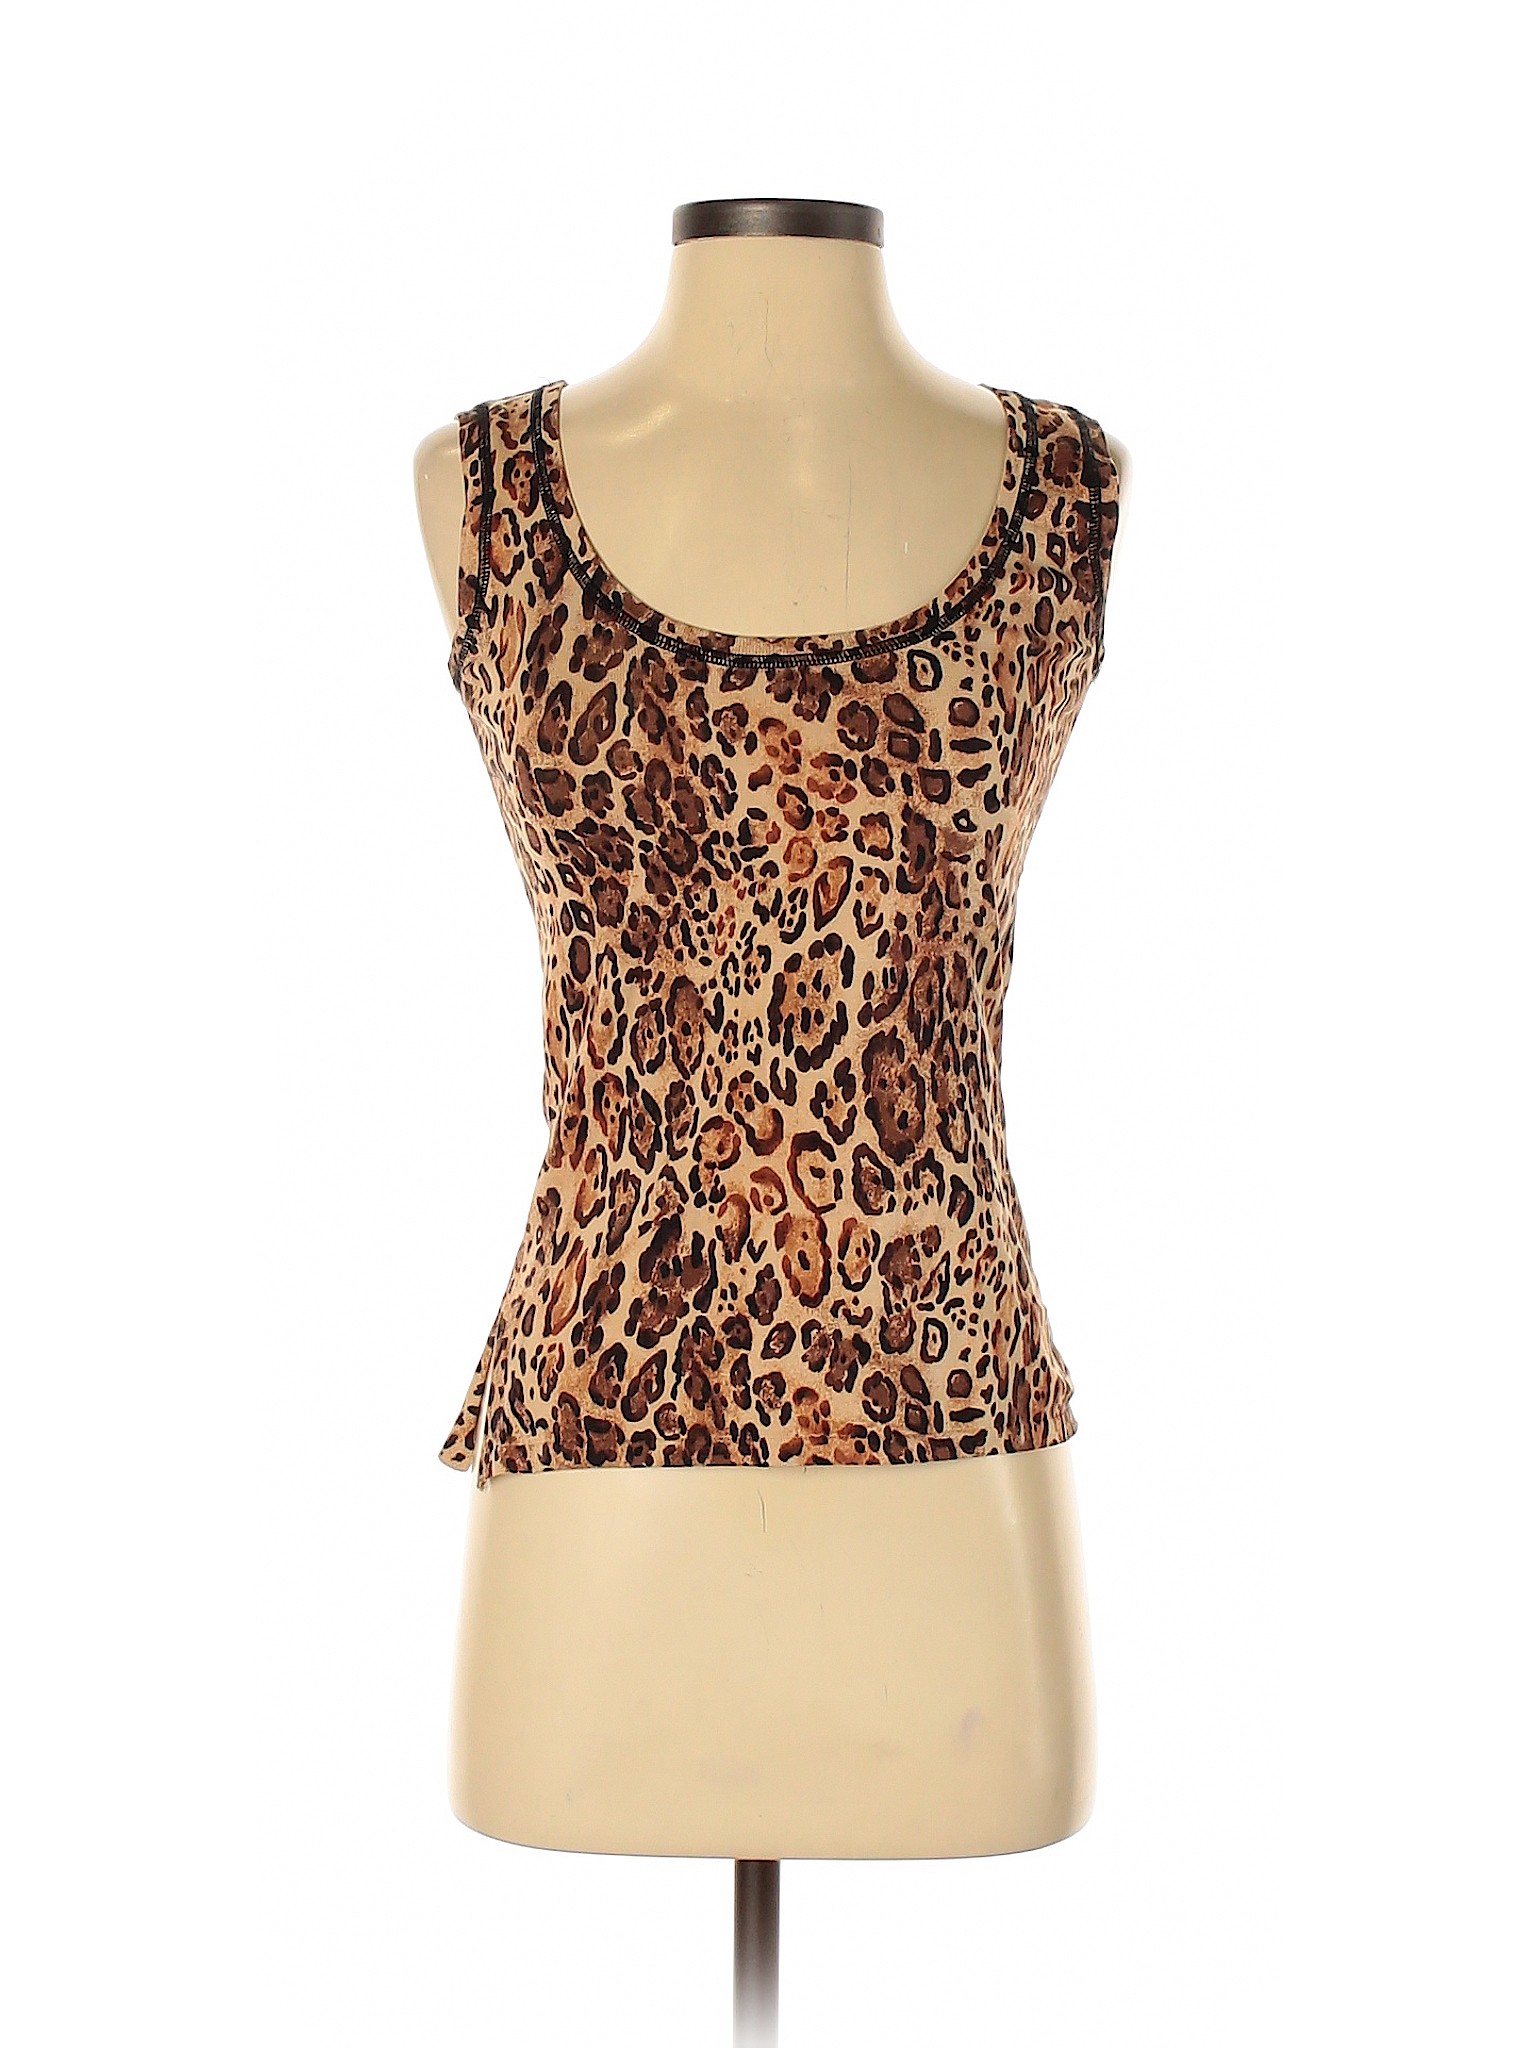 Spiegel Women Brown Sleeveless Silk Top XS | eBay